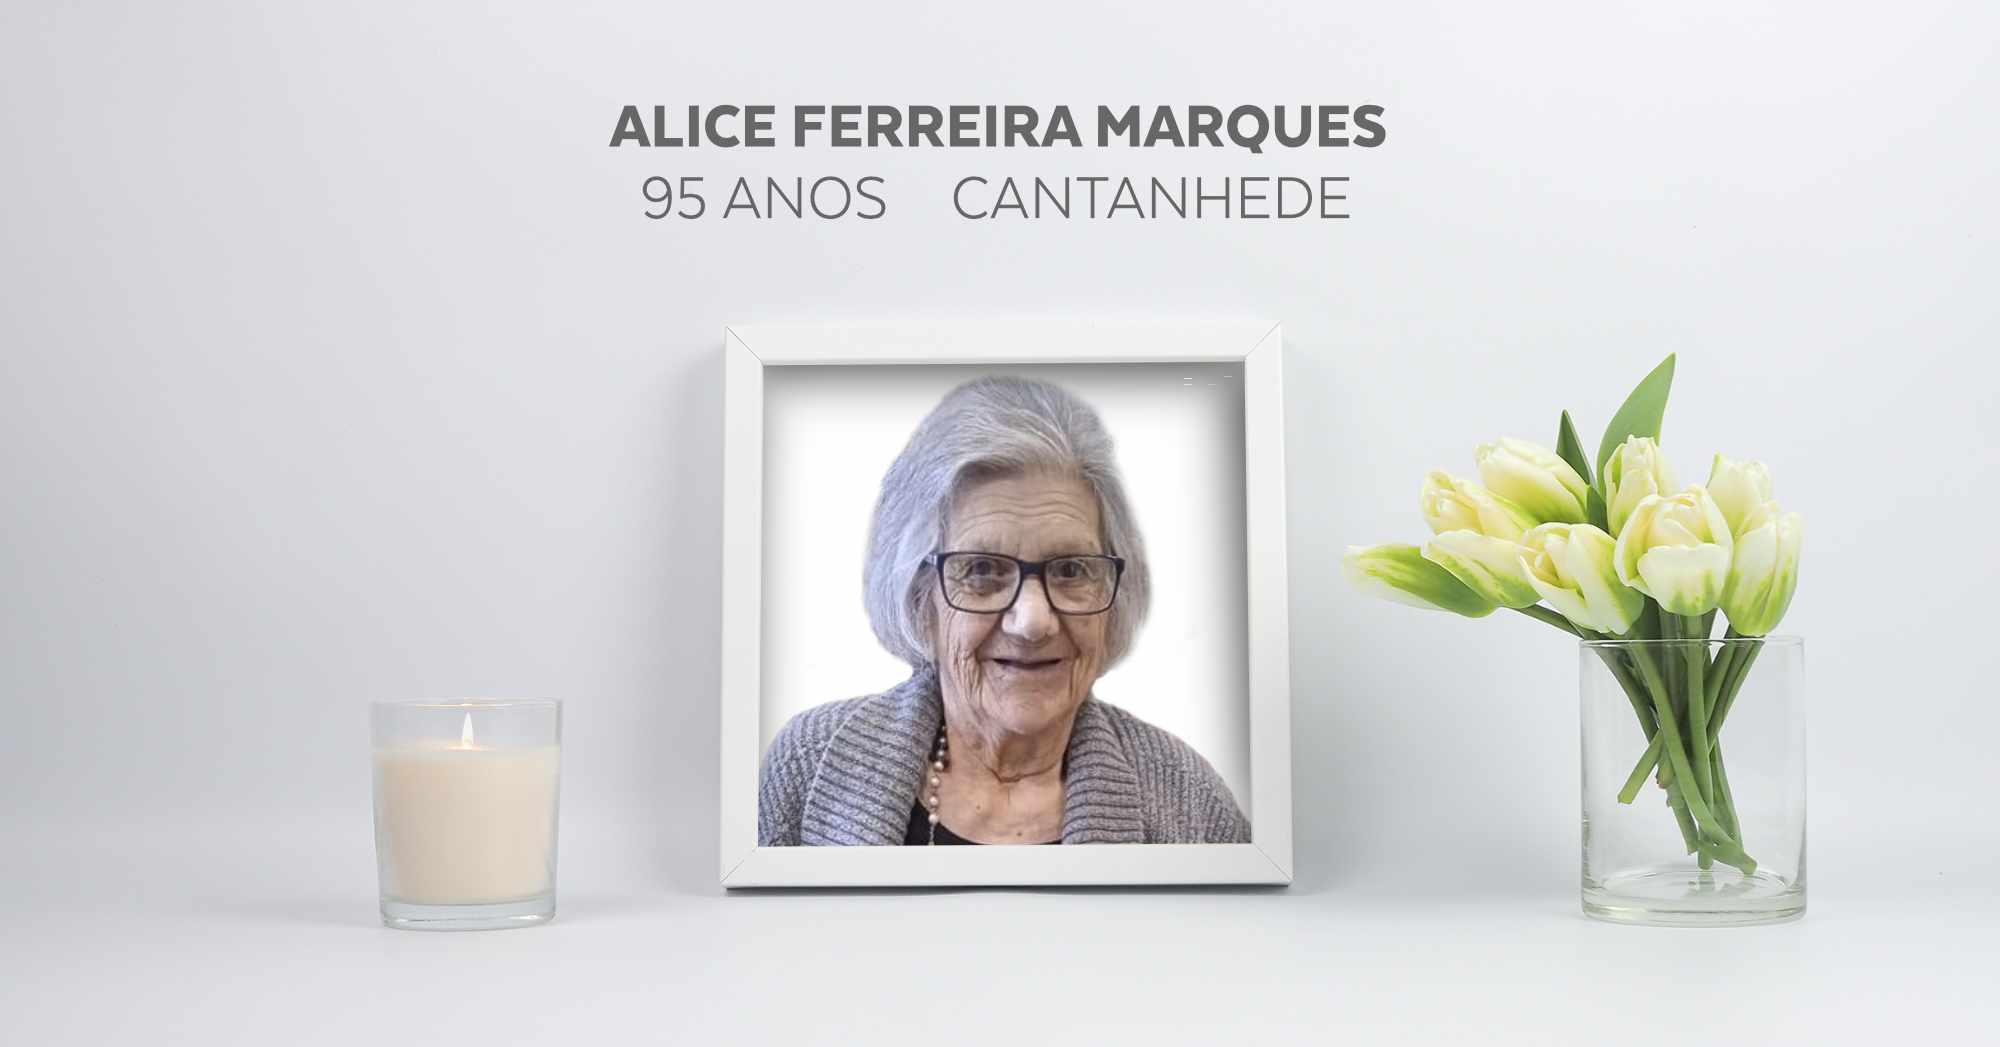 Alice Ferreira Marques